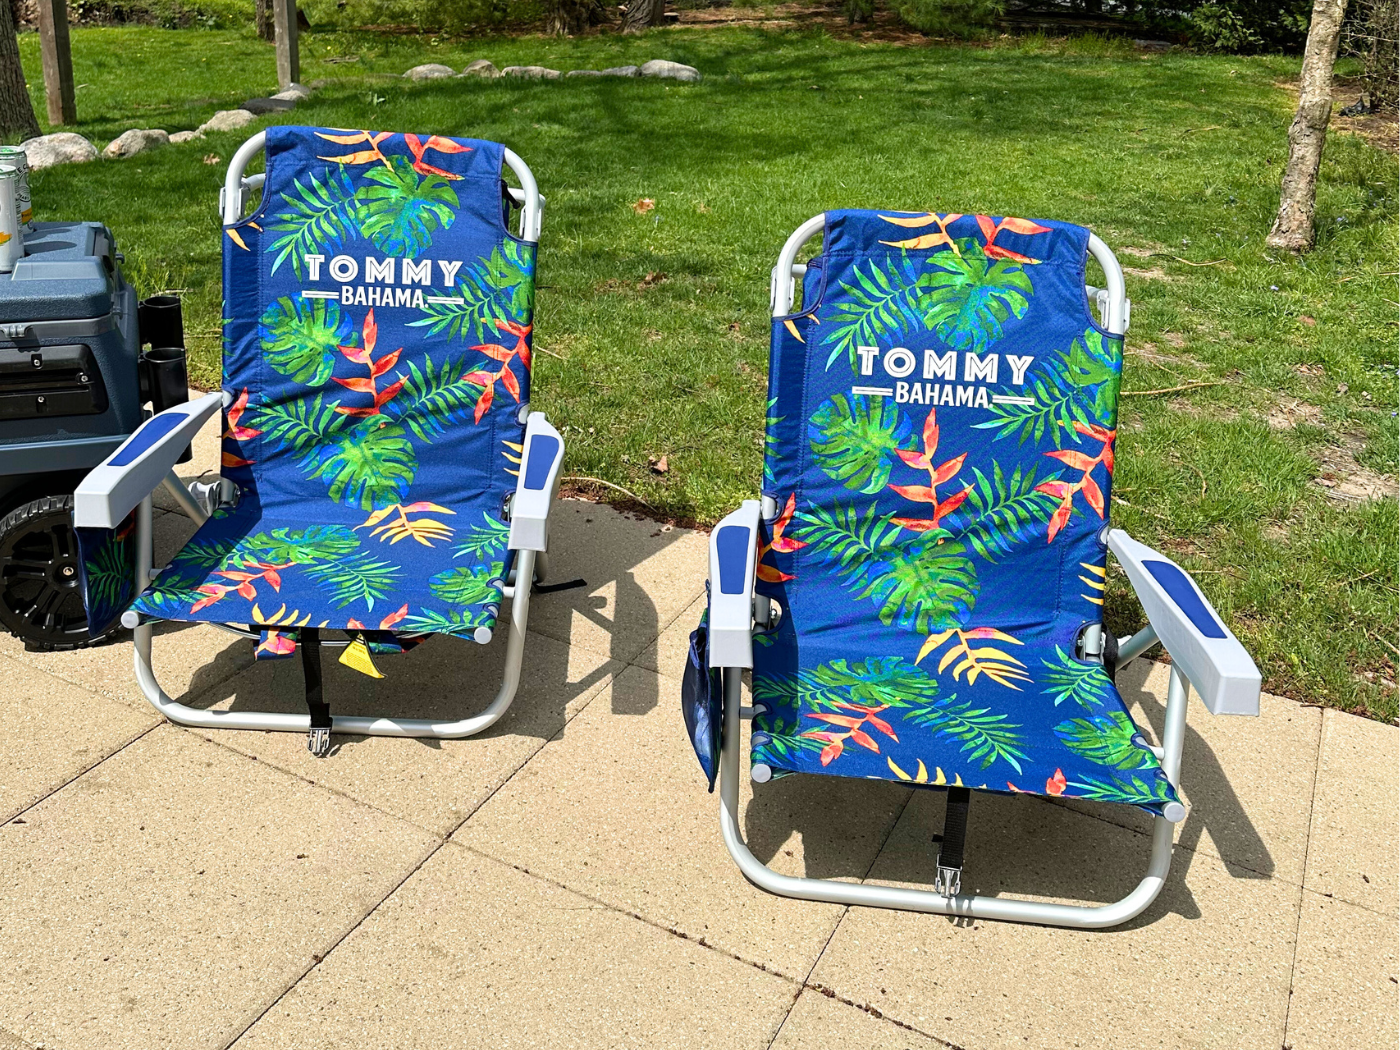 Tommy Bahama beach chairs